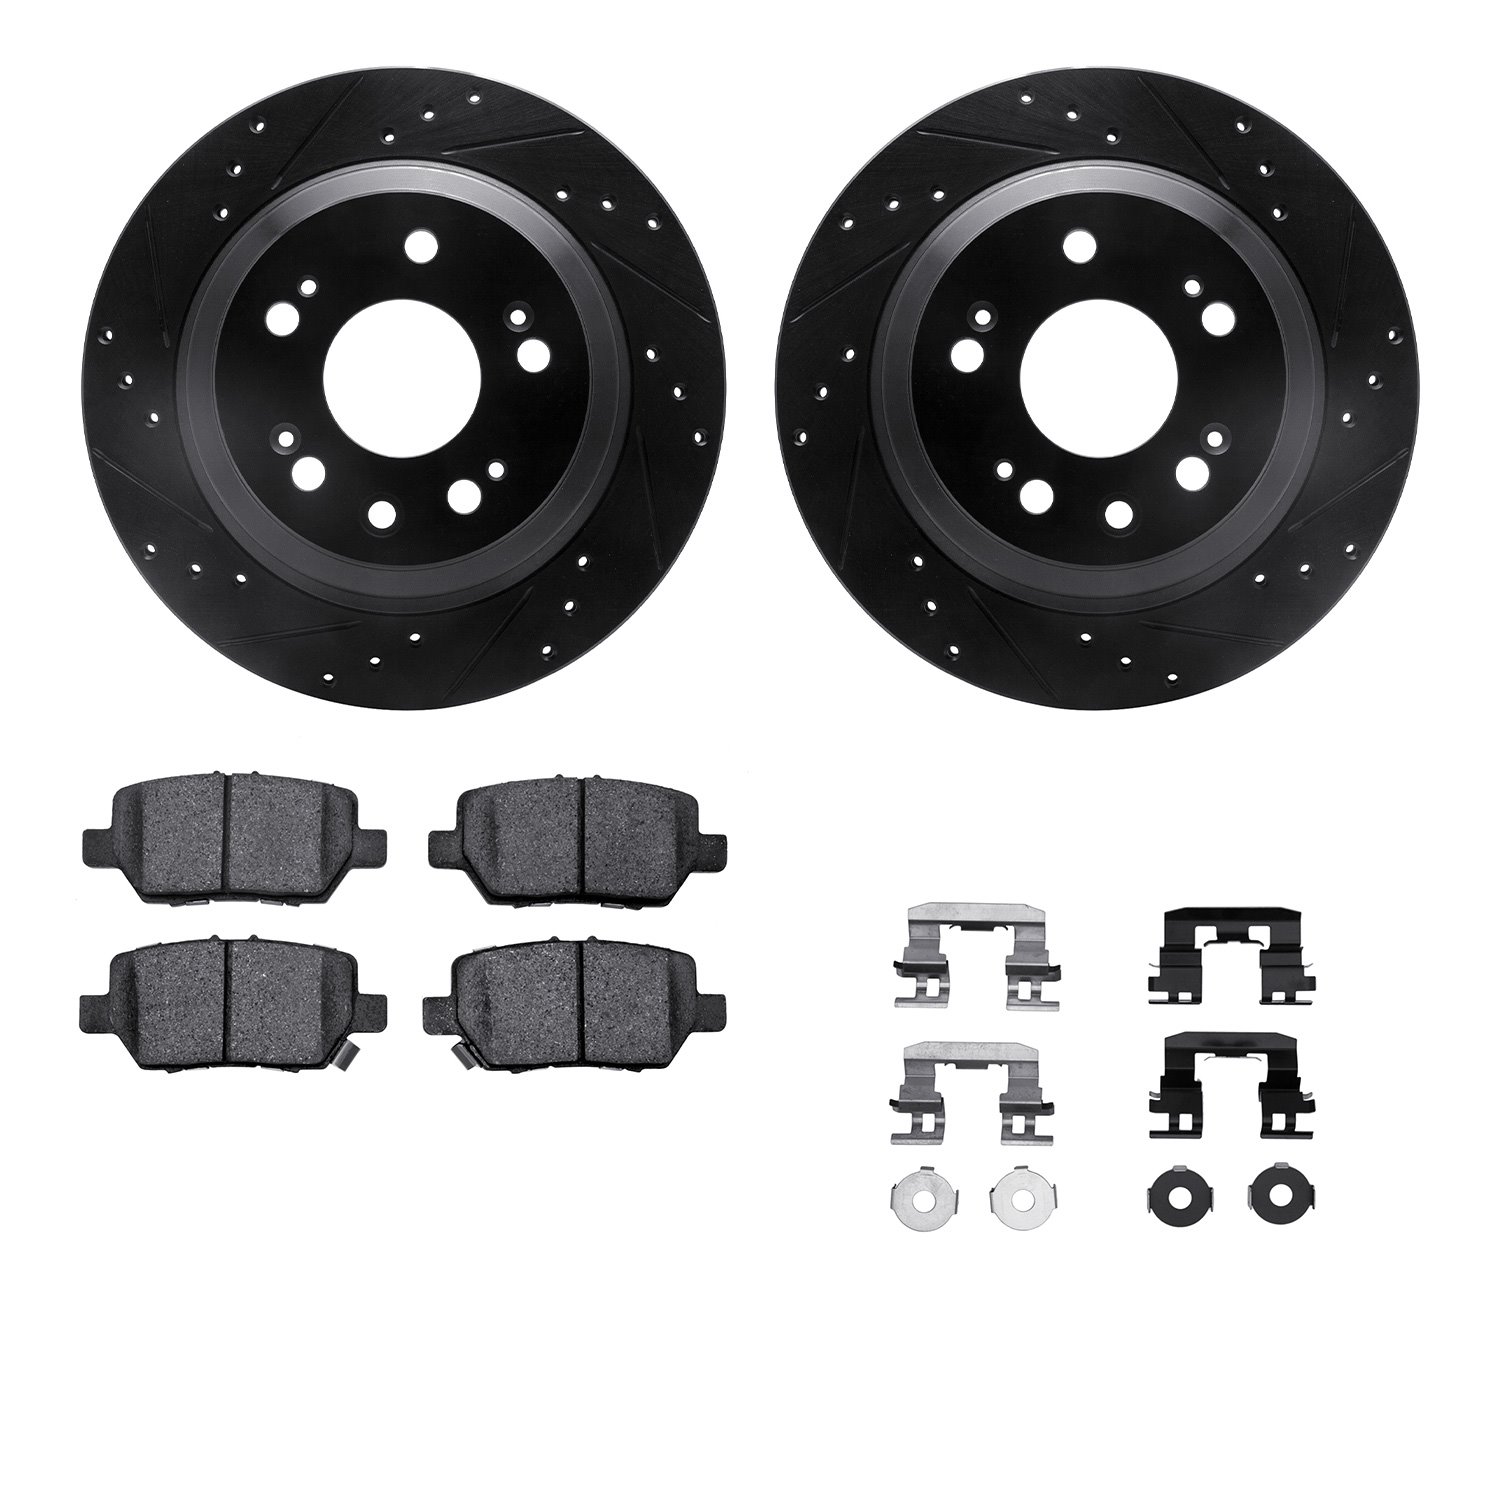 8312-58020 Drilled/Slotted Brake Rotors with 3000-Series Ceramic Brake Pads Kit & Hardware [Black], 2005-2012 Acura/Honda, Posit